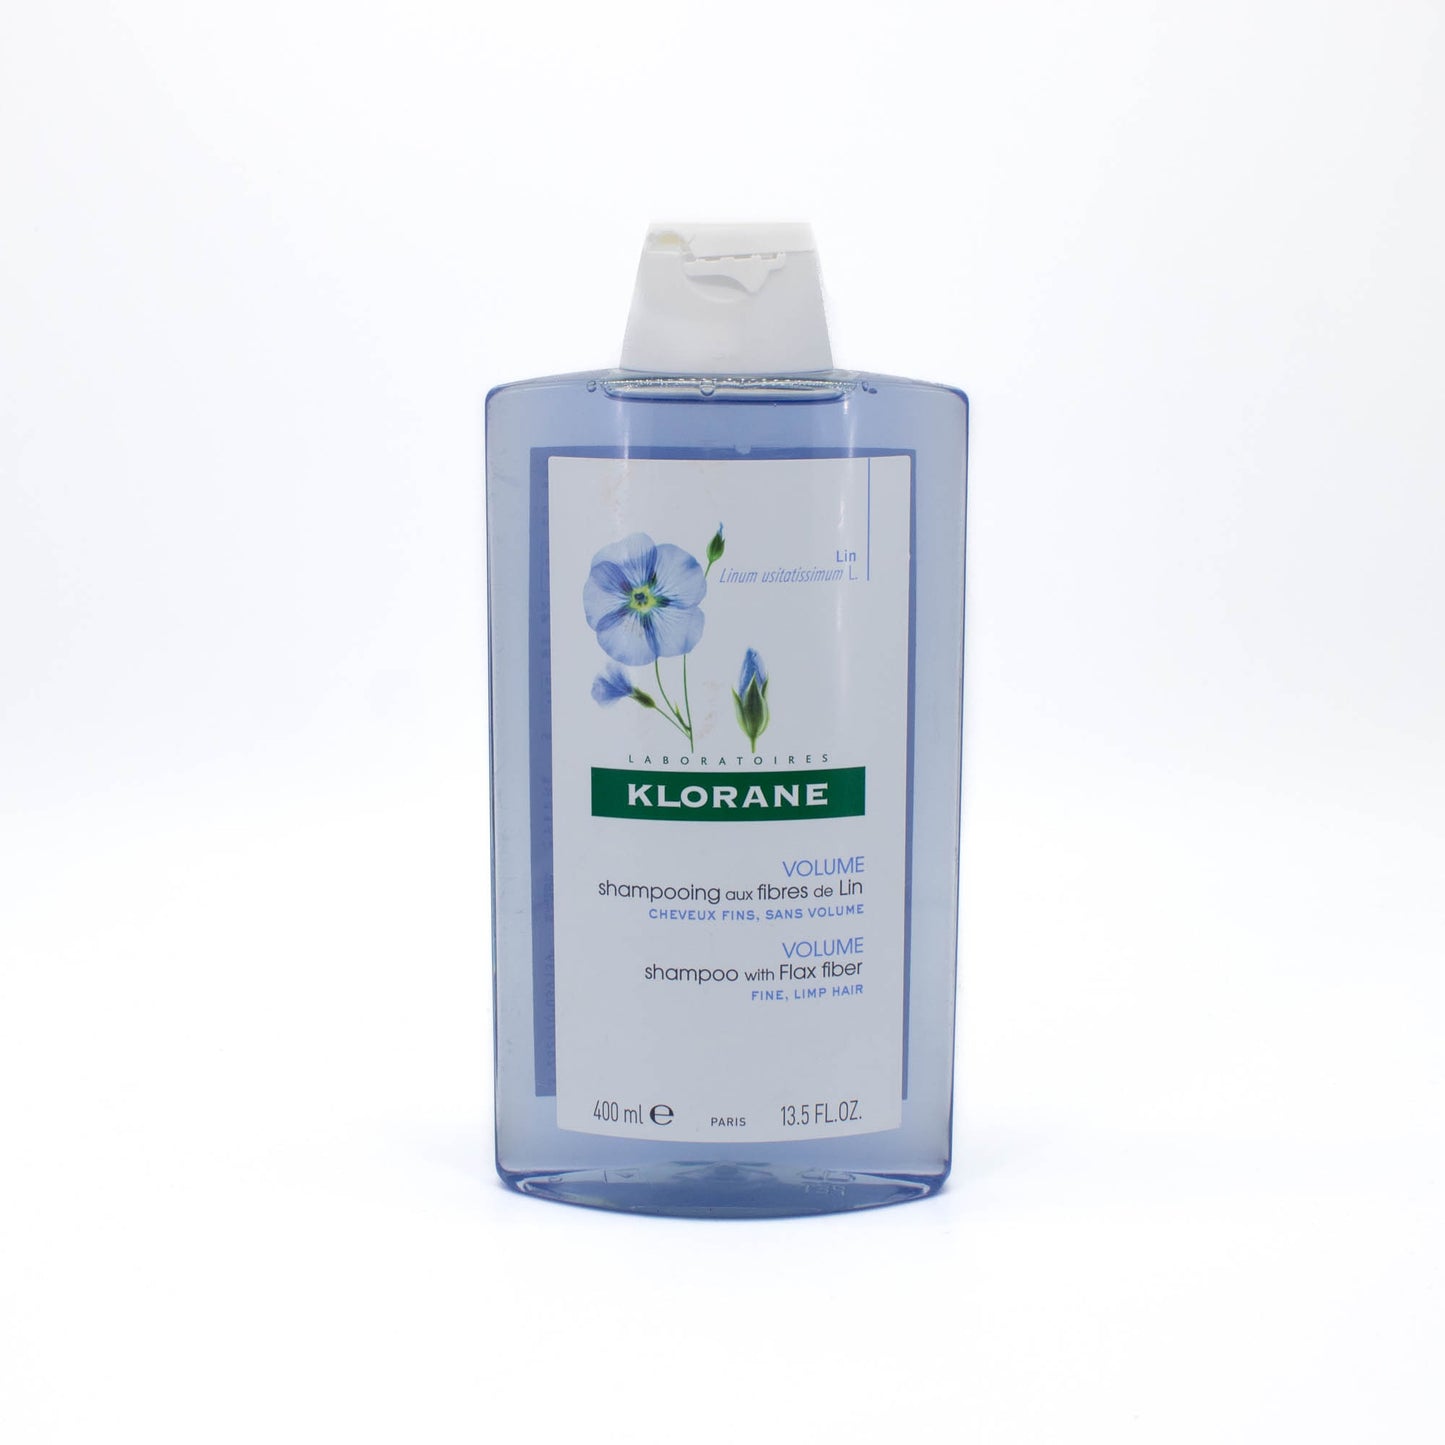 KLORANE Volume Shampoo with Flax Fiber 13.5oz - Damaged Lid